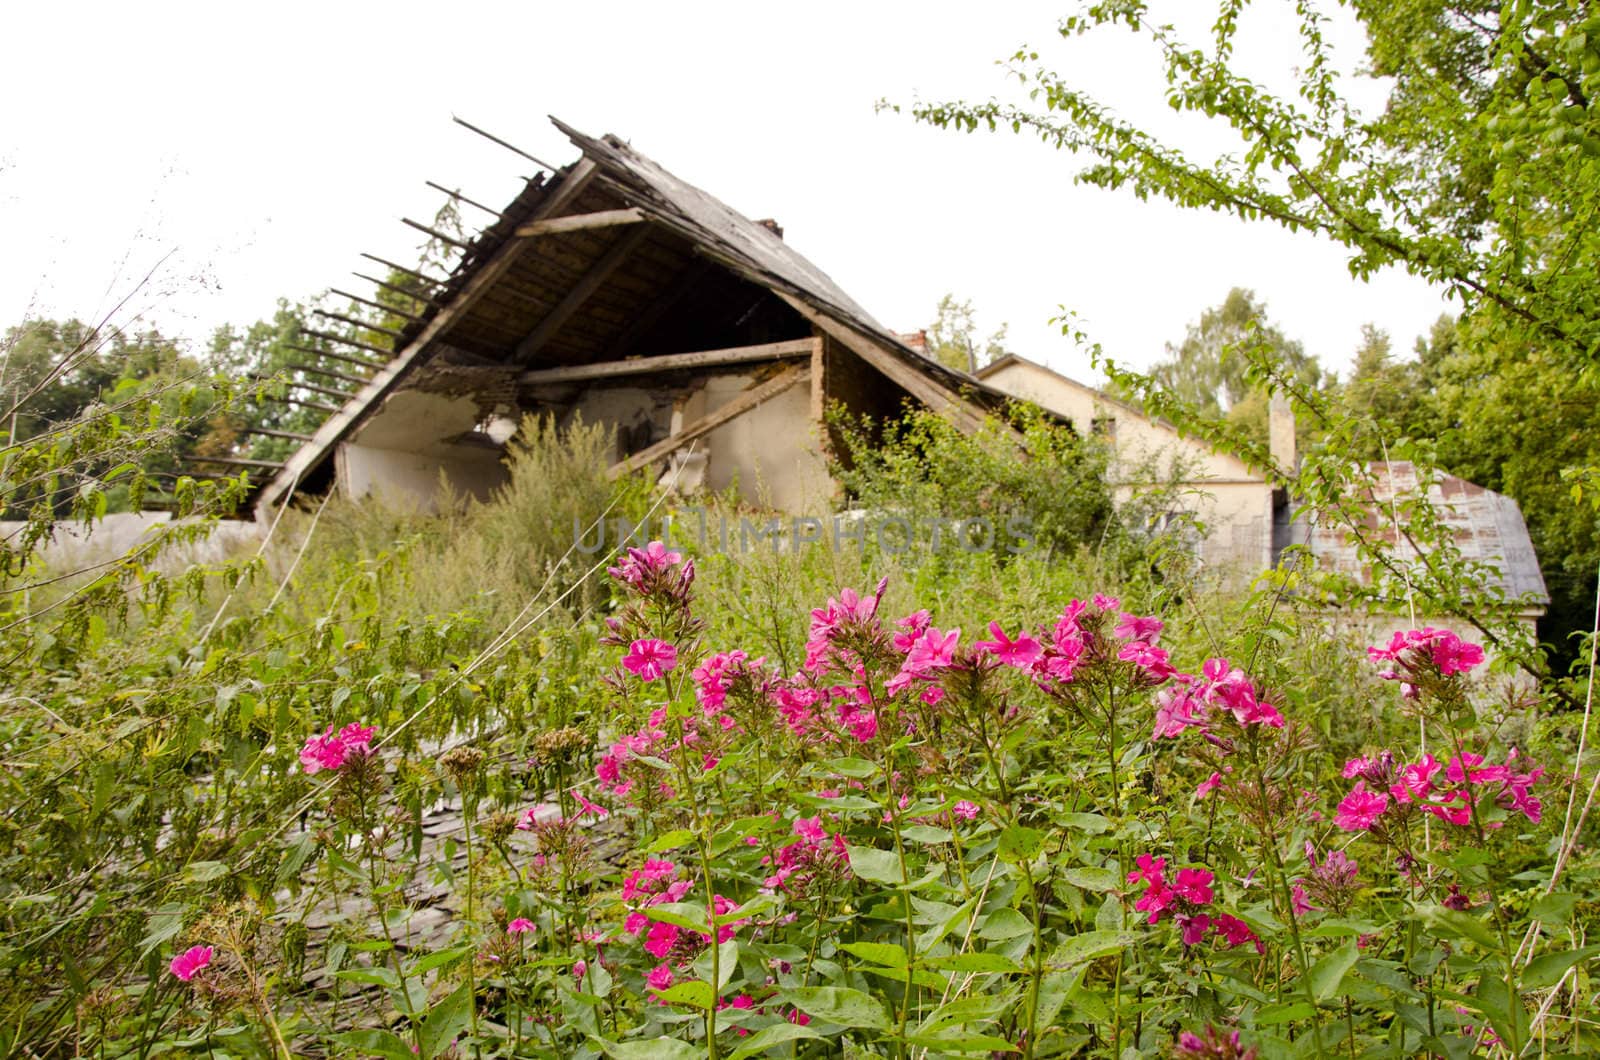 Abandoned village. Crumbling house garden residue by sauletas